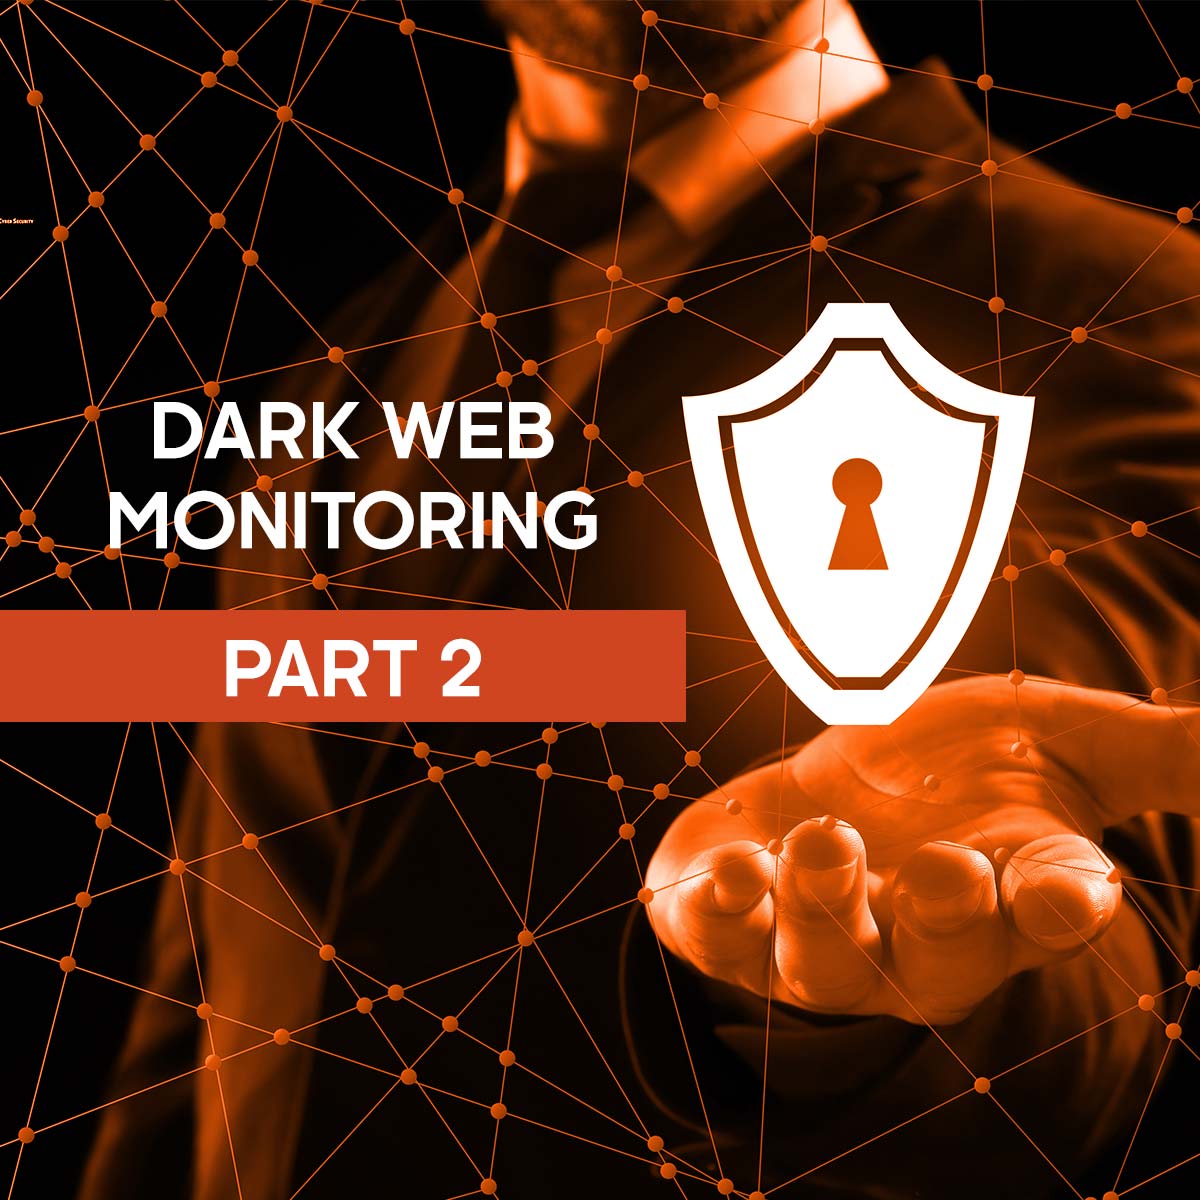 Dark Web Monitoring Part 2